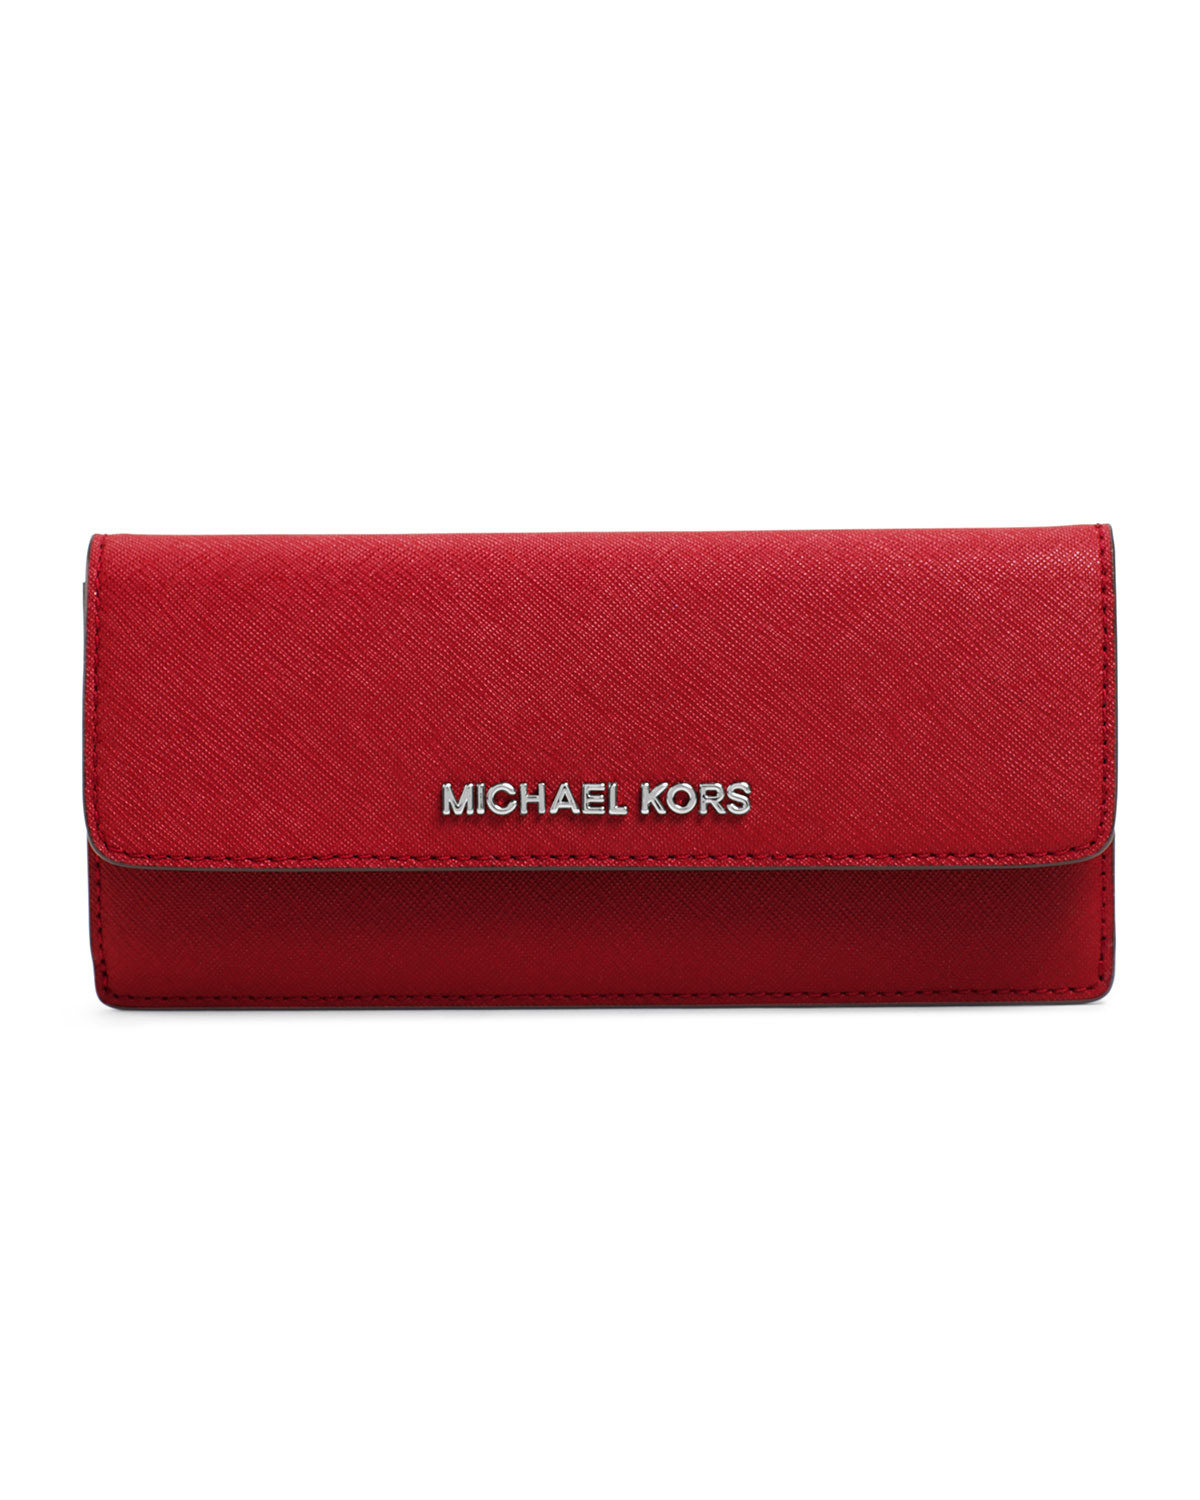 Michael Kors Michael Large Jet Set Travel Slim Wallet in Scarlet (Red) -